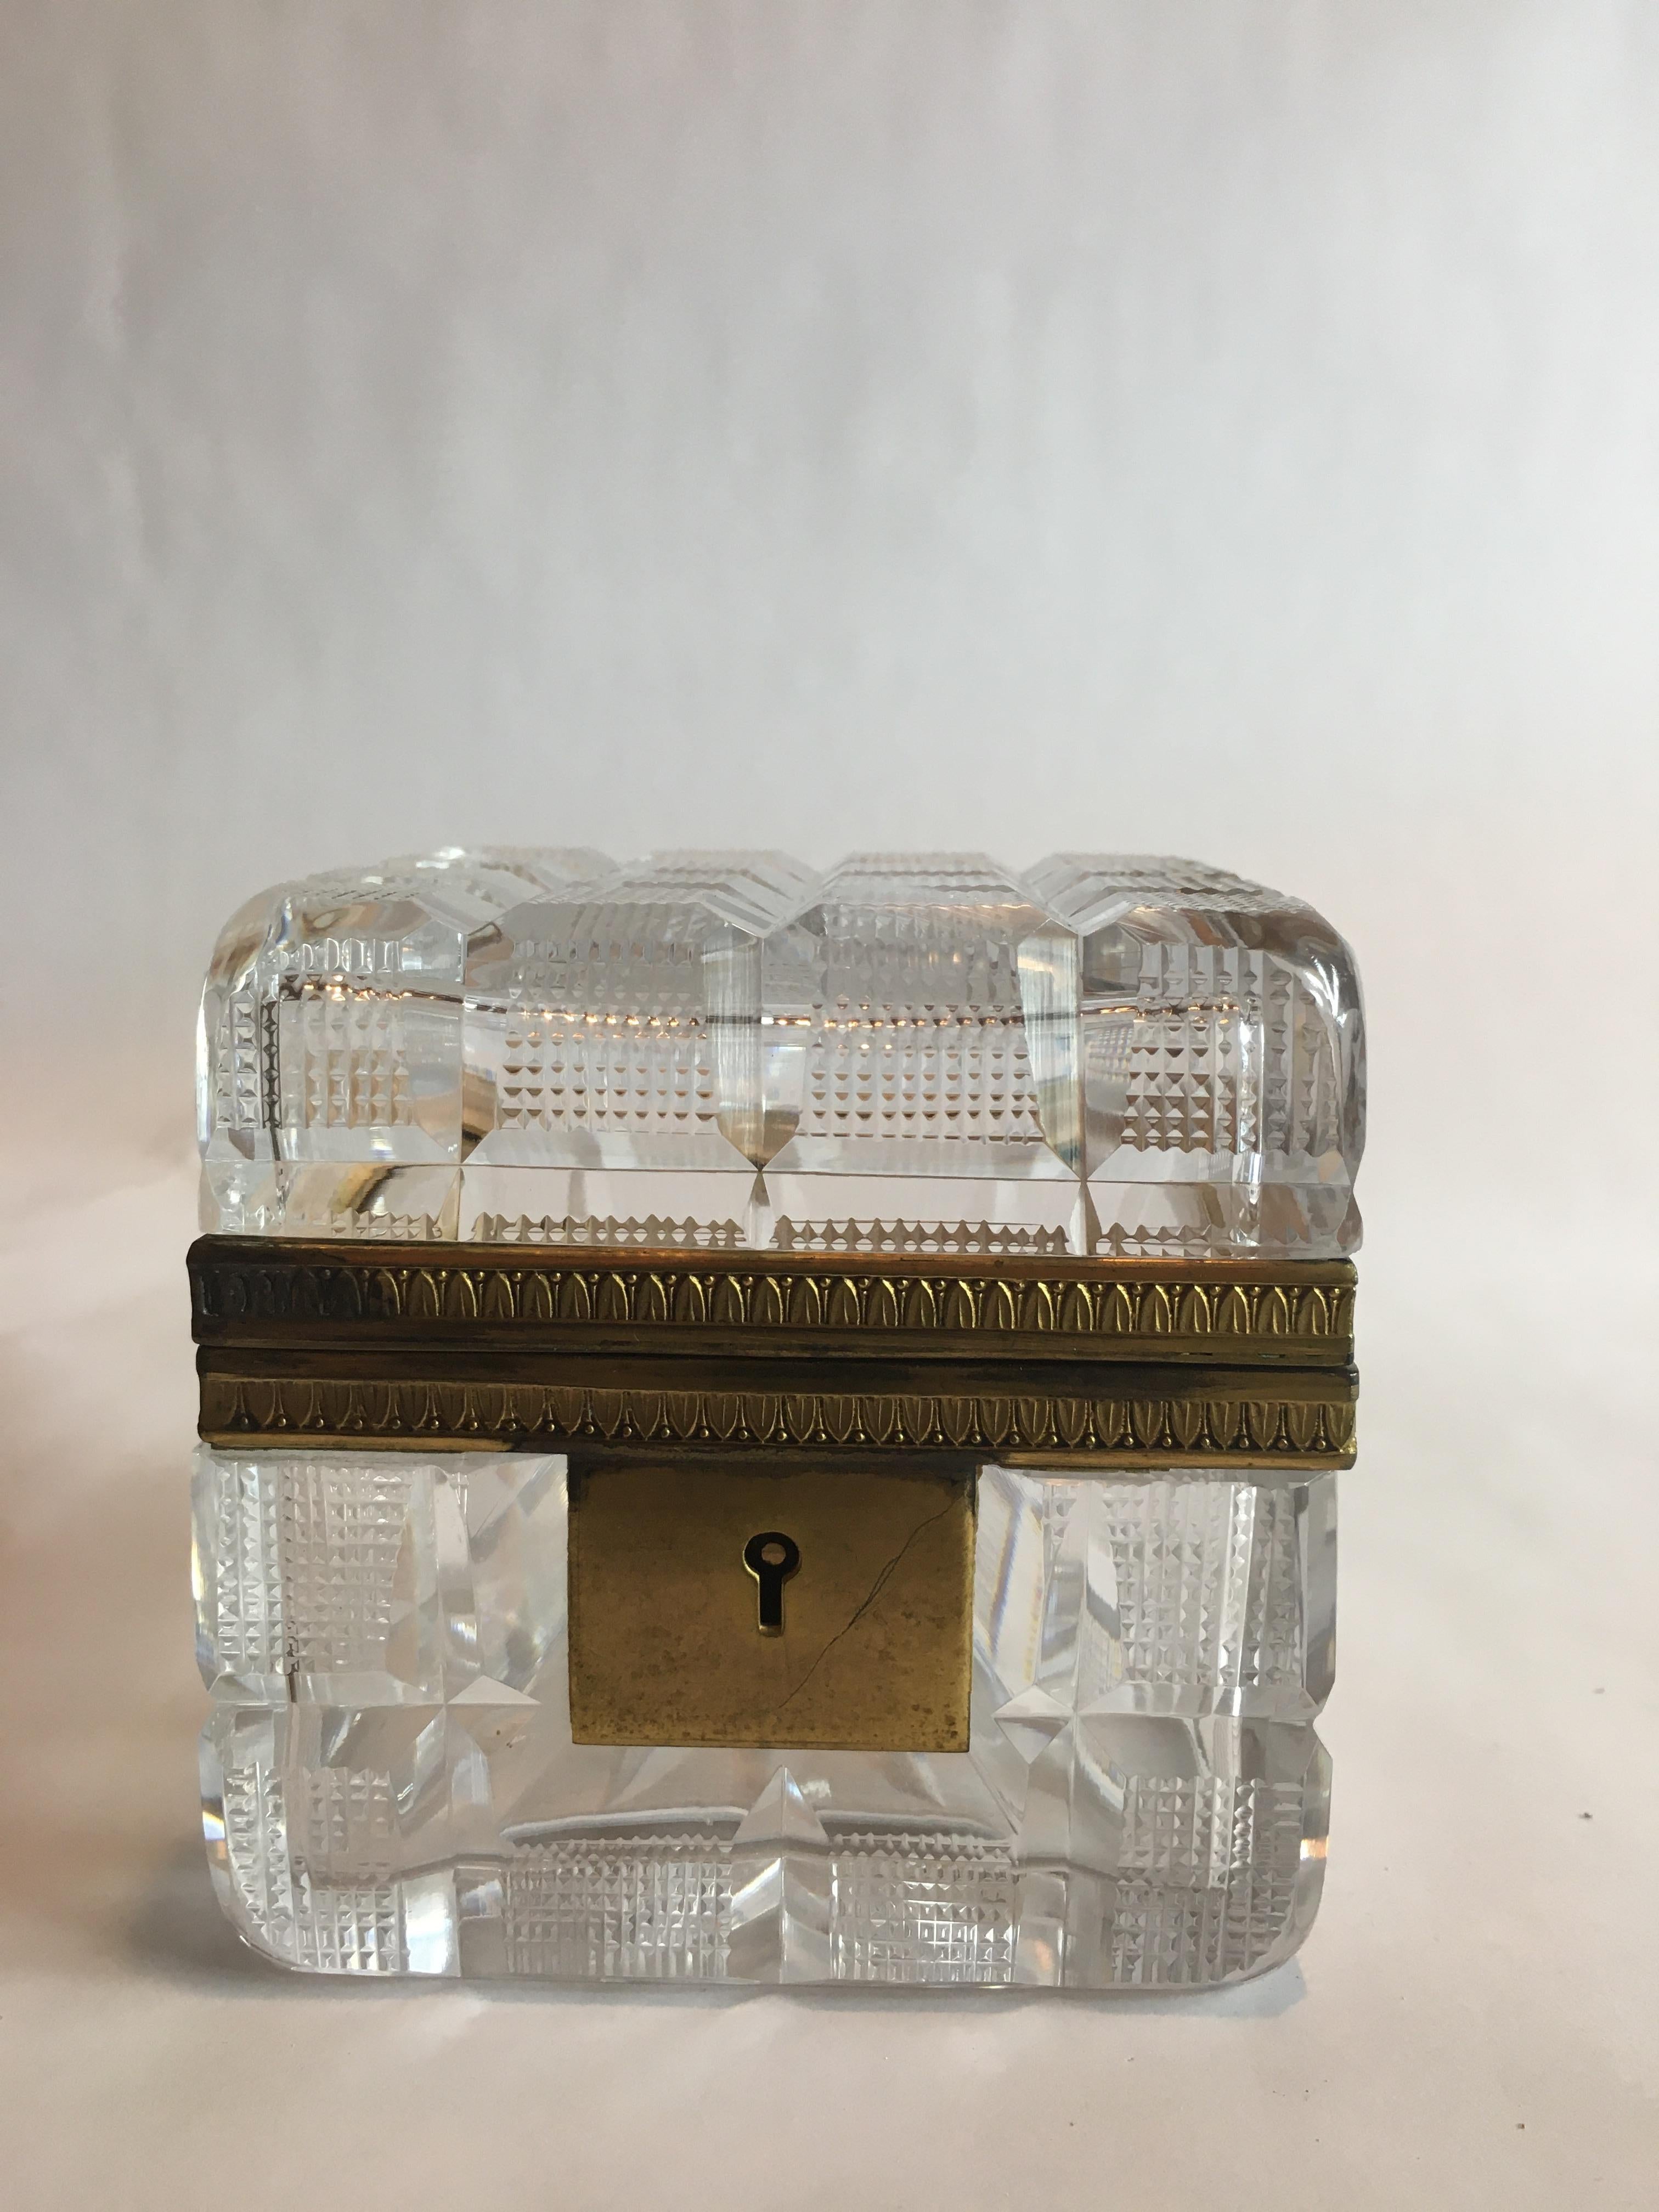 Square cut crystal and ormolu casket box.